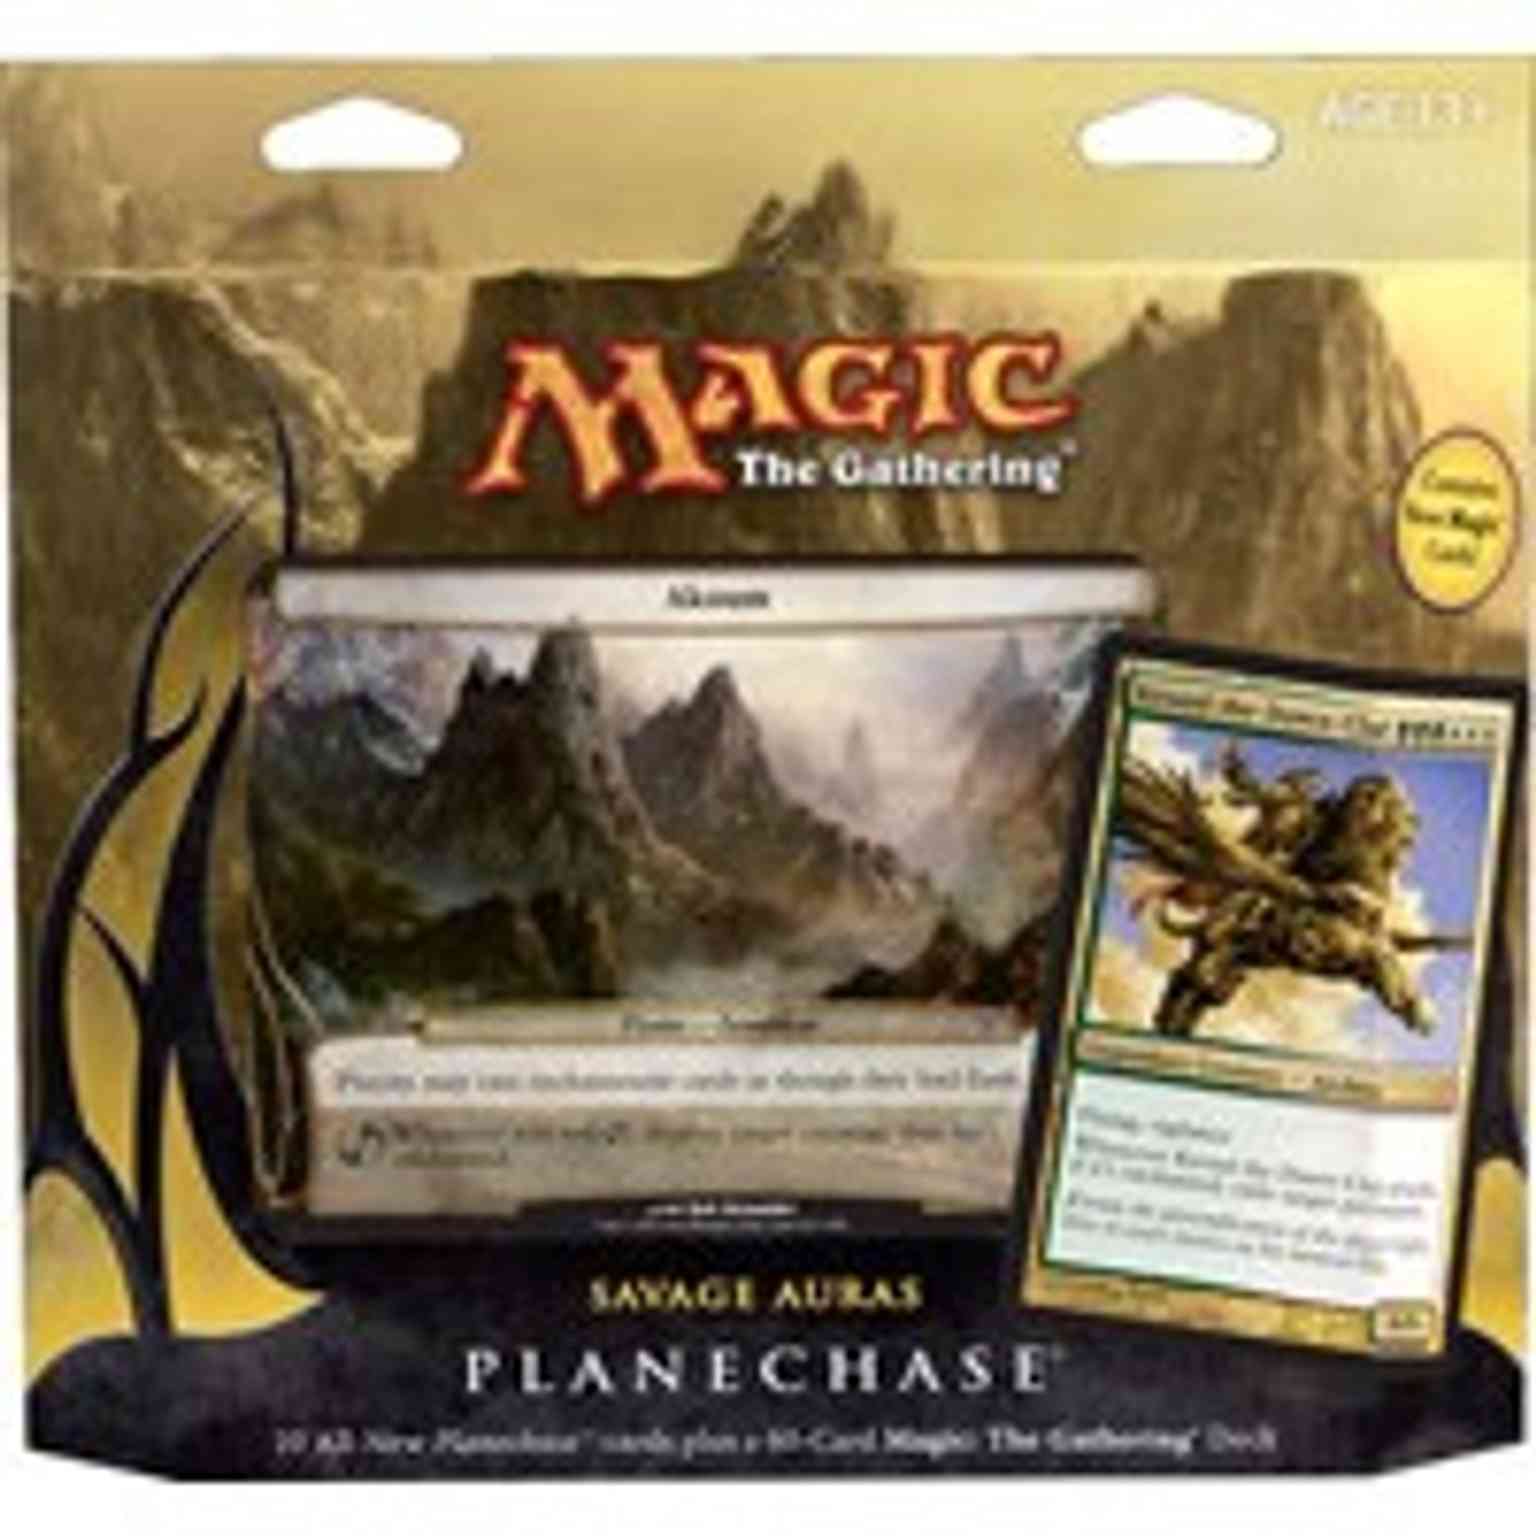 Planechase 2012 - Savage Auras Deck magic card front